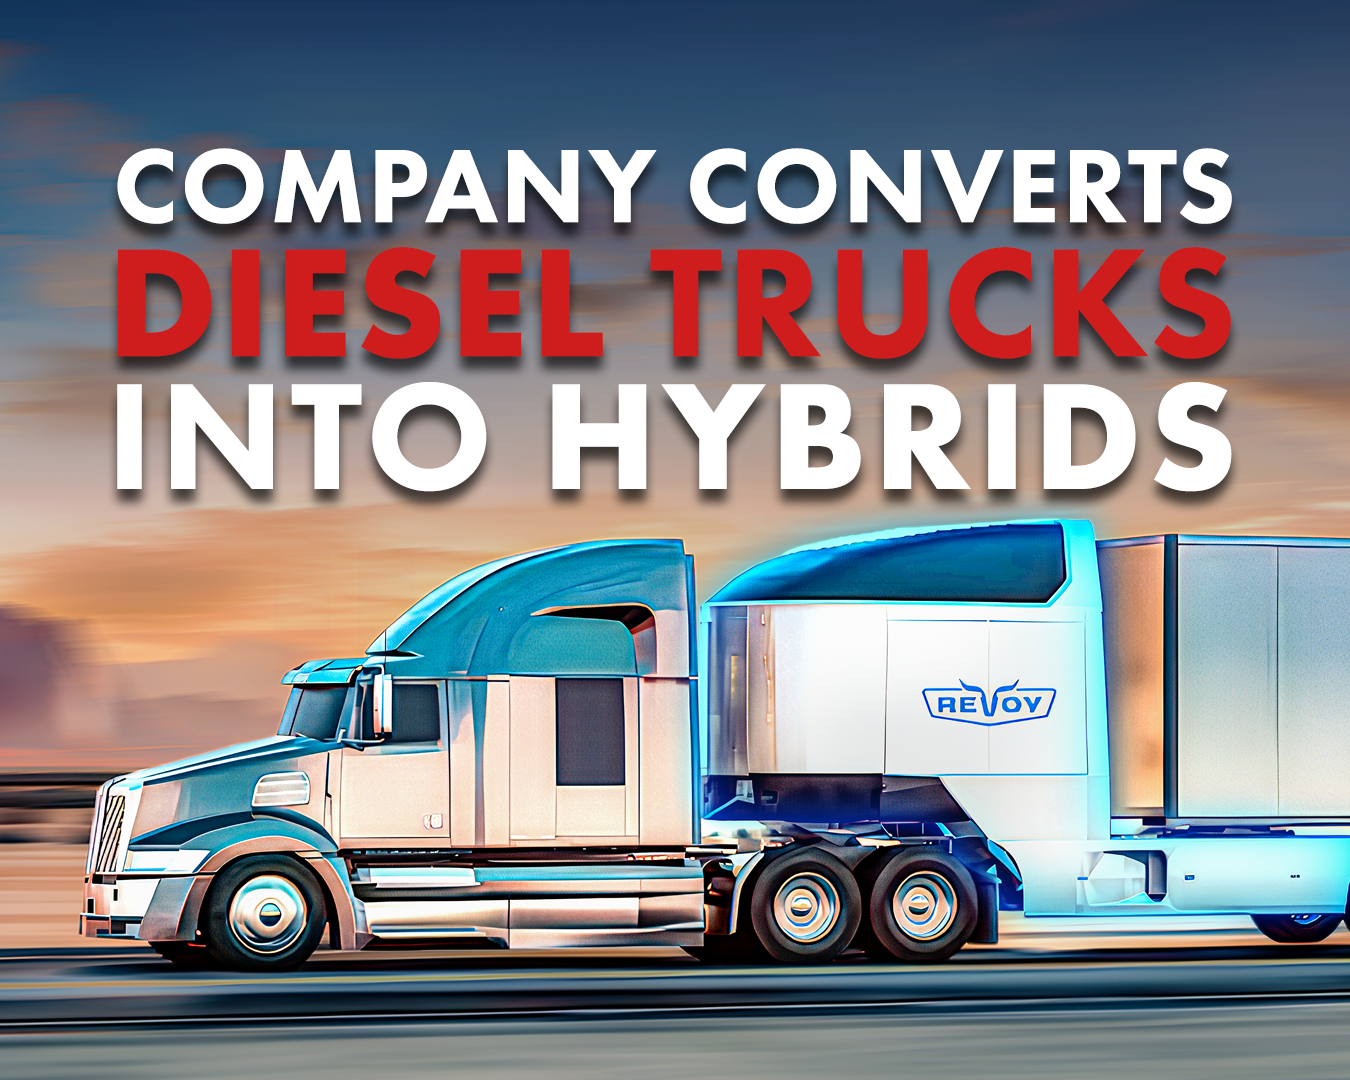 Company Converts Diesel Trucks into Hybrids